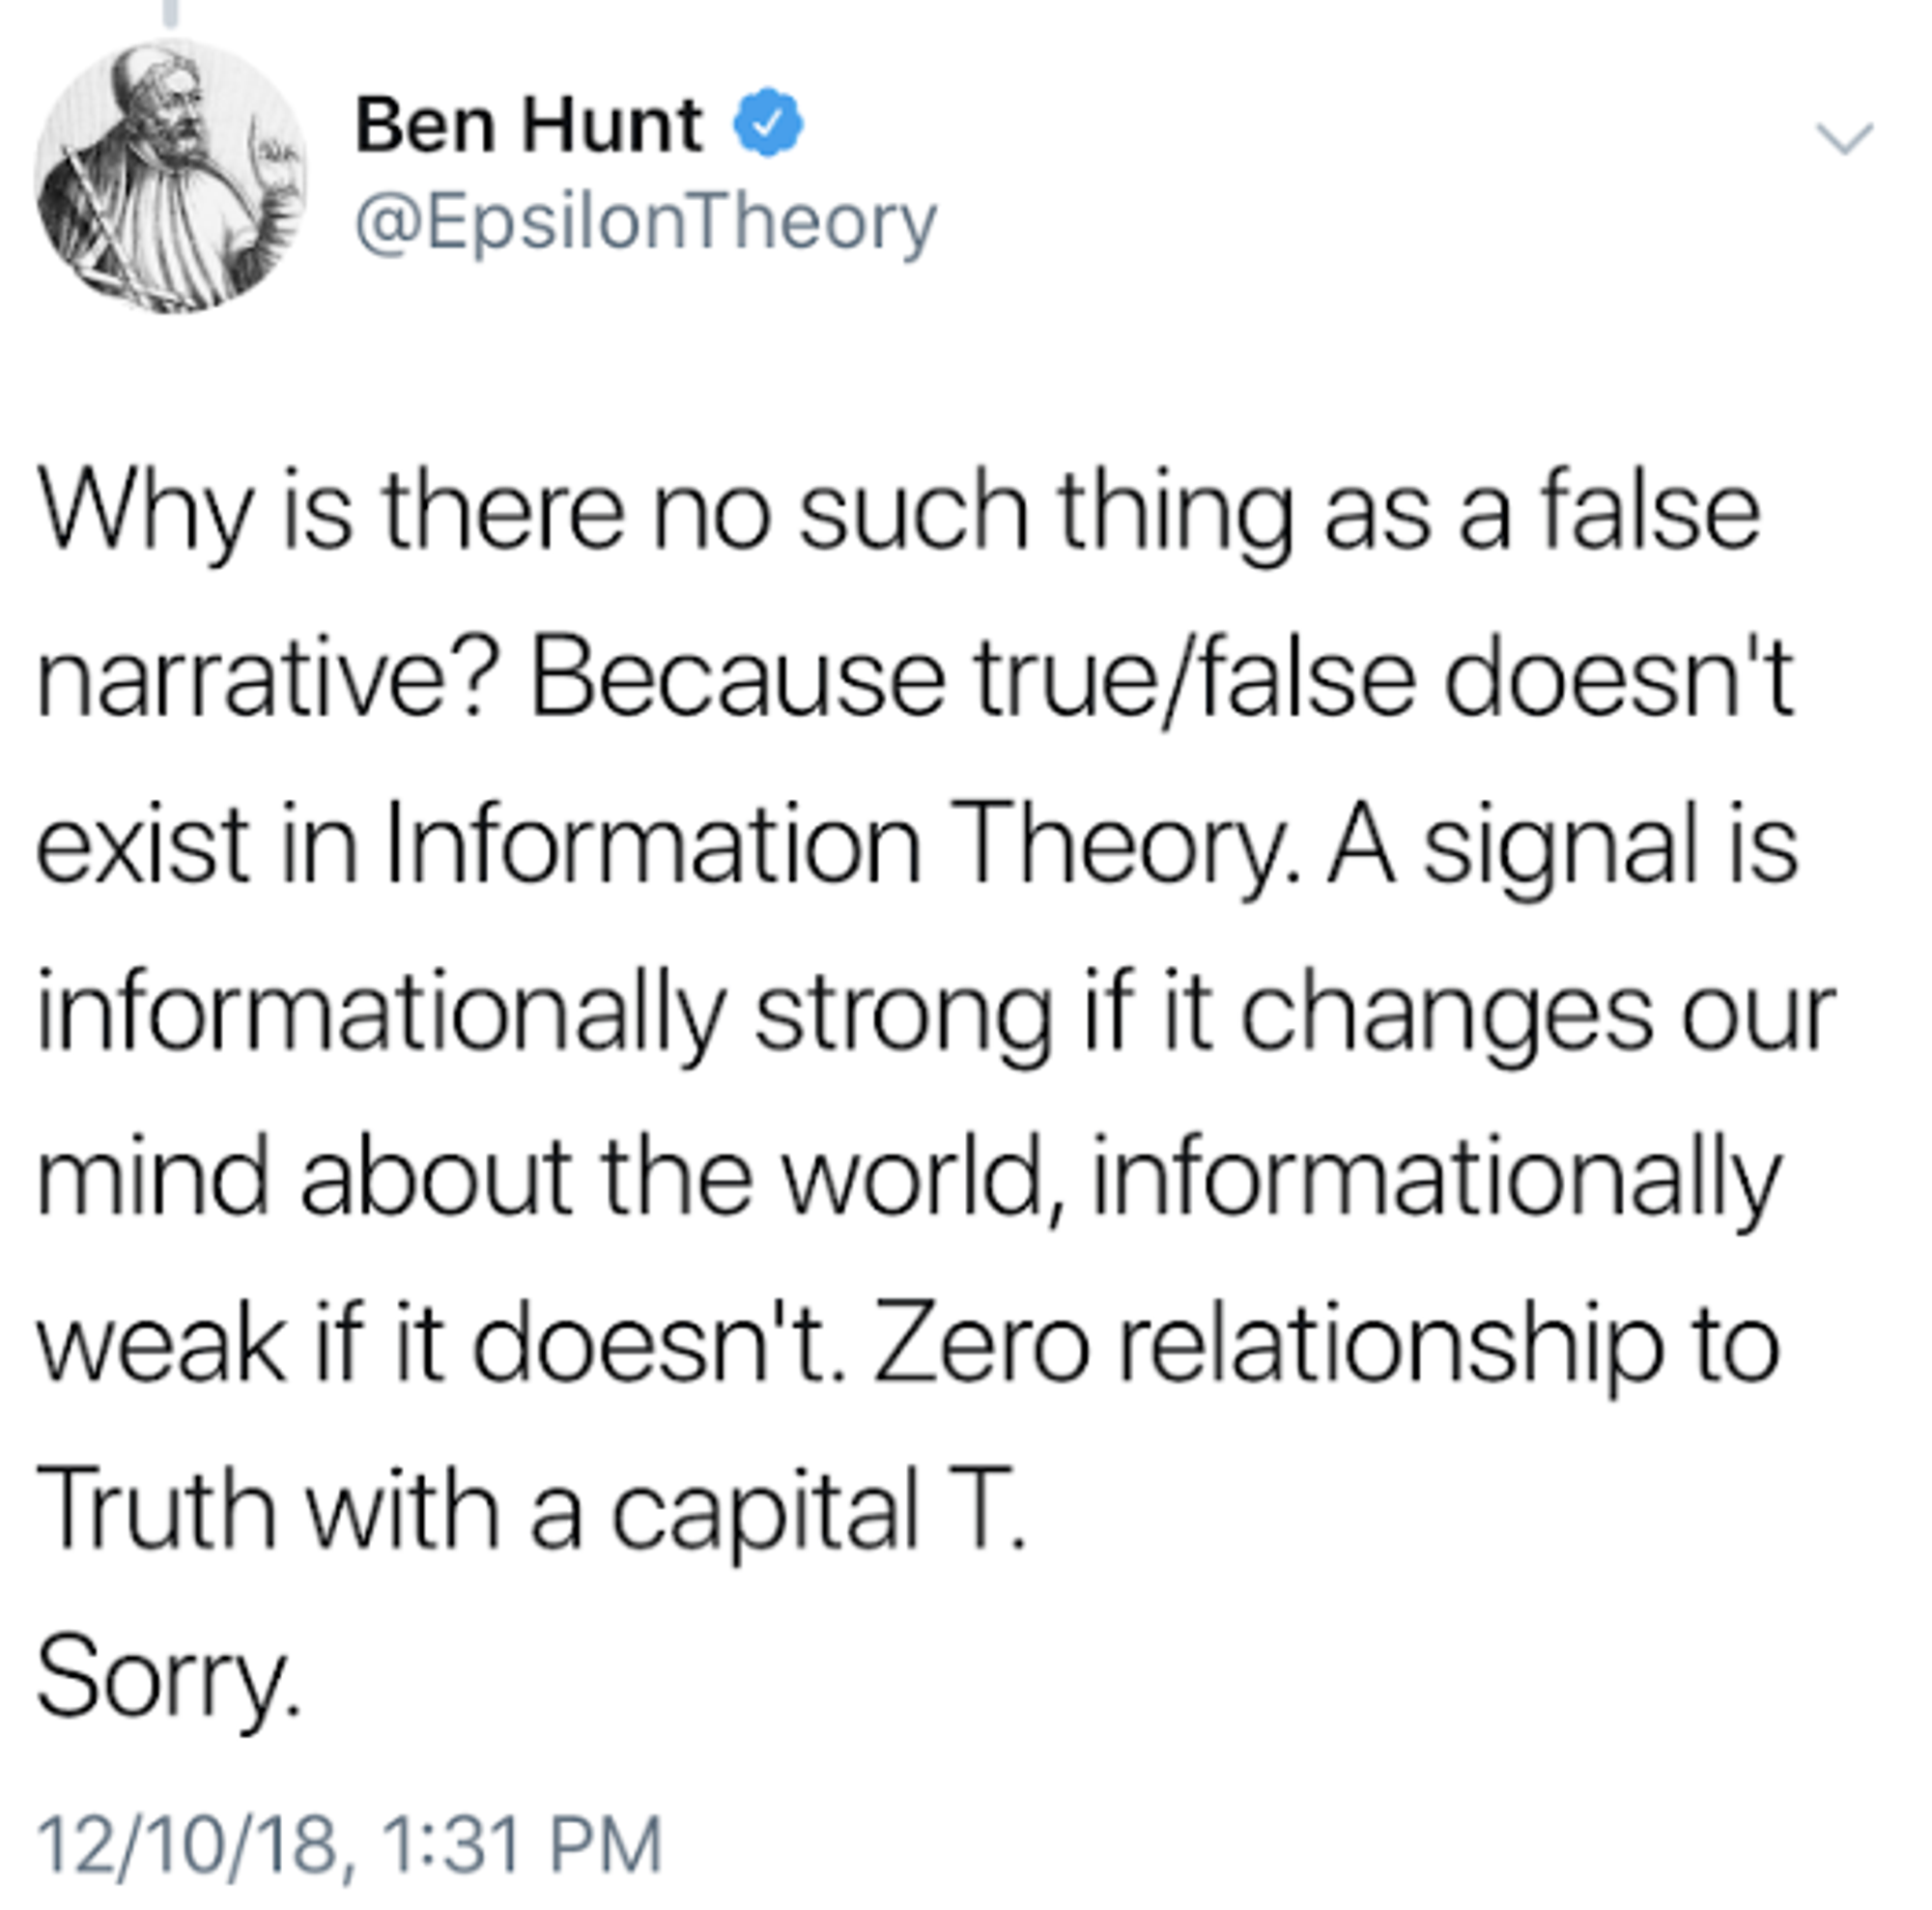 No such things as false narratives